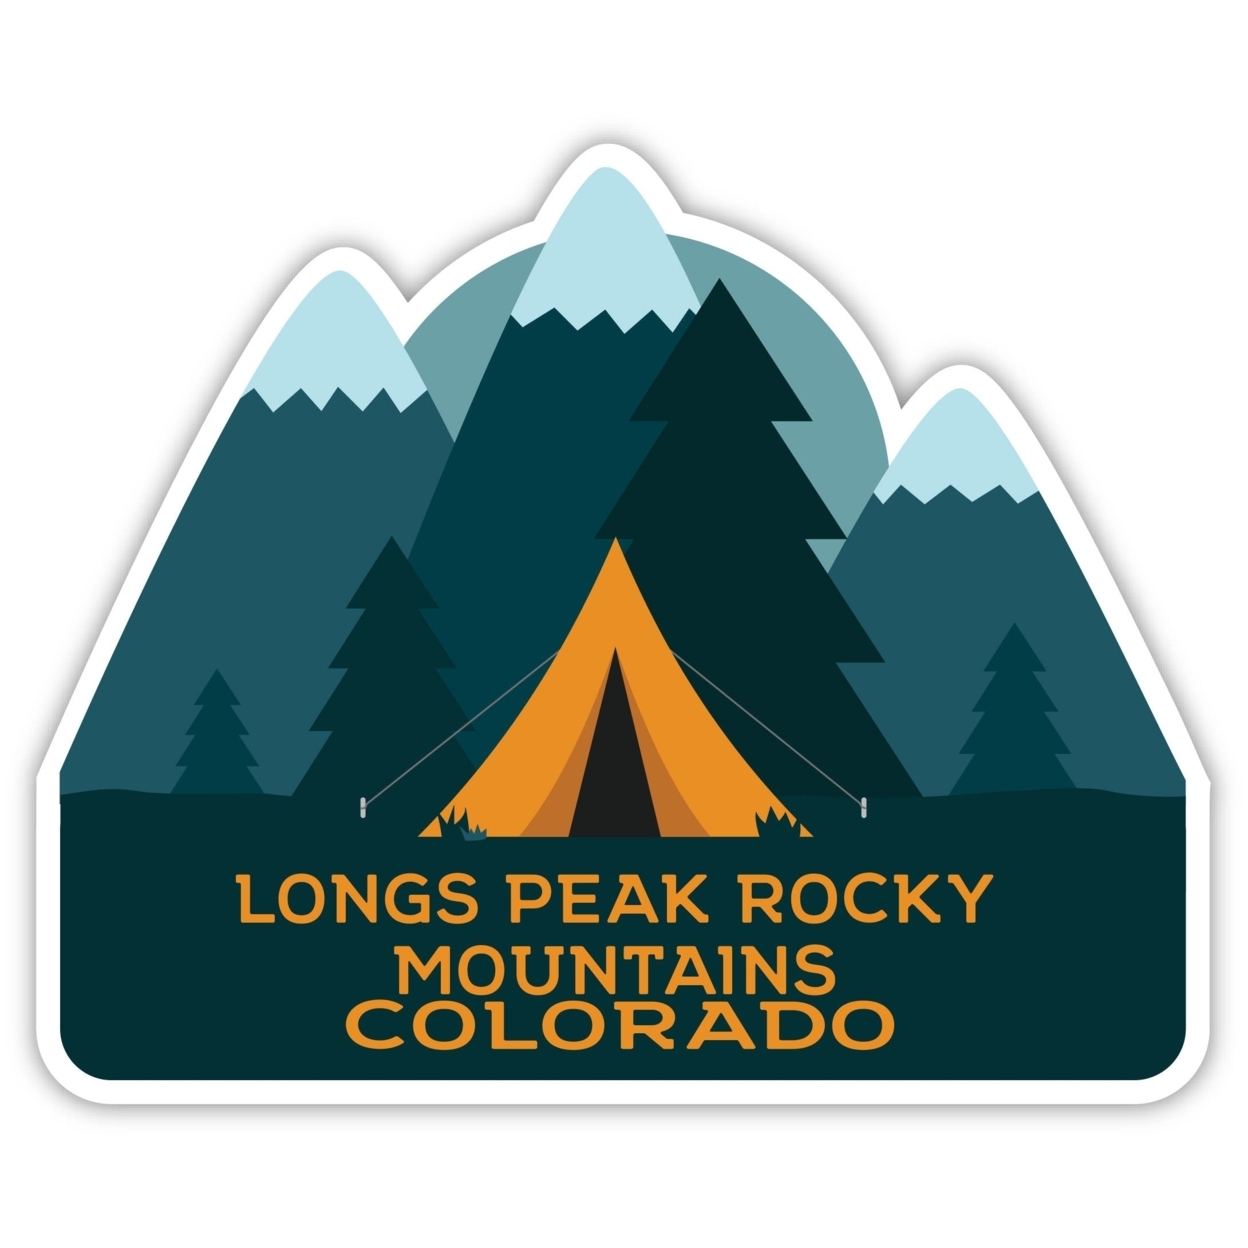 Longs Peak Rocky Mountains Colorado Souvenir Decorative Stickers (Choose Theme And Size) - 2-Inch, Tent